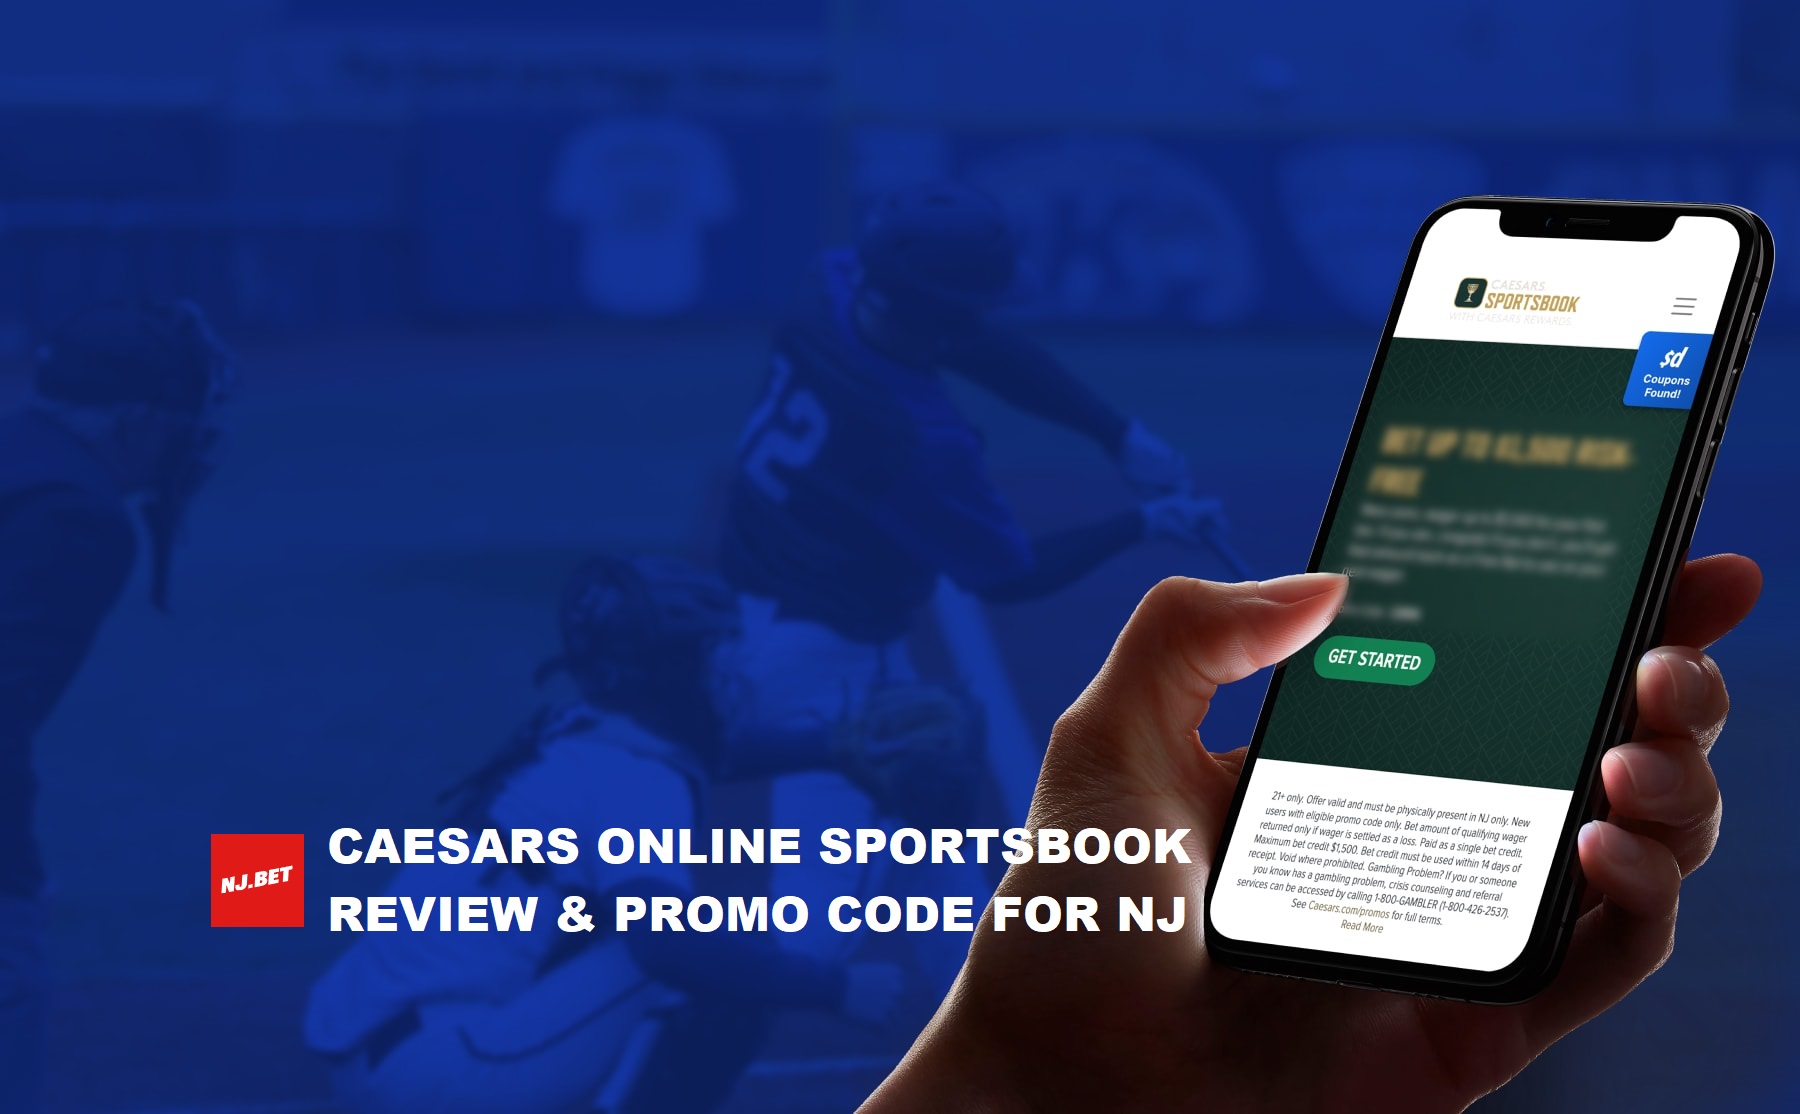 Caesars sportsbook promo code review NJ